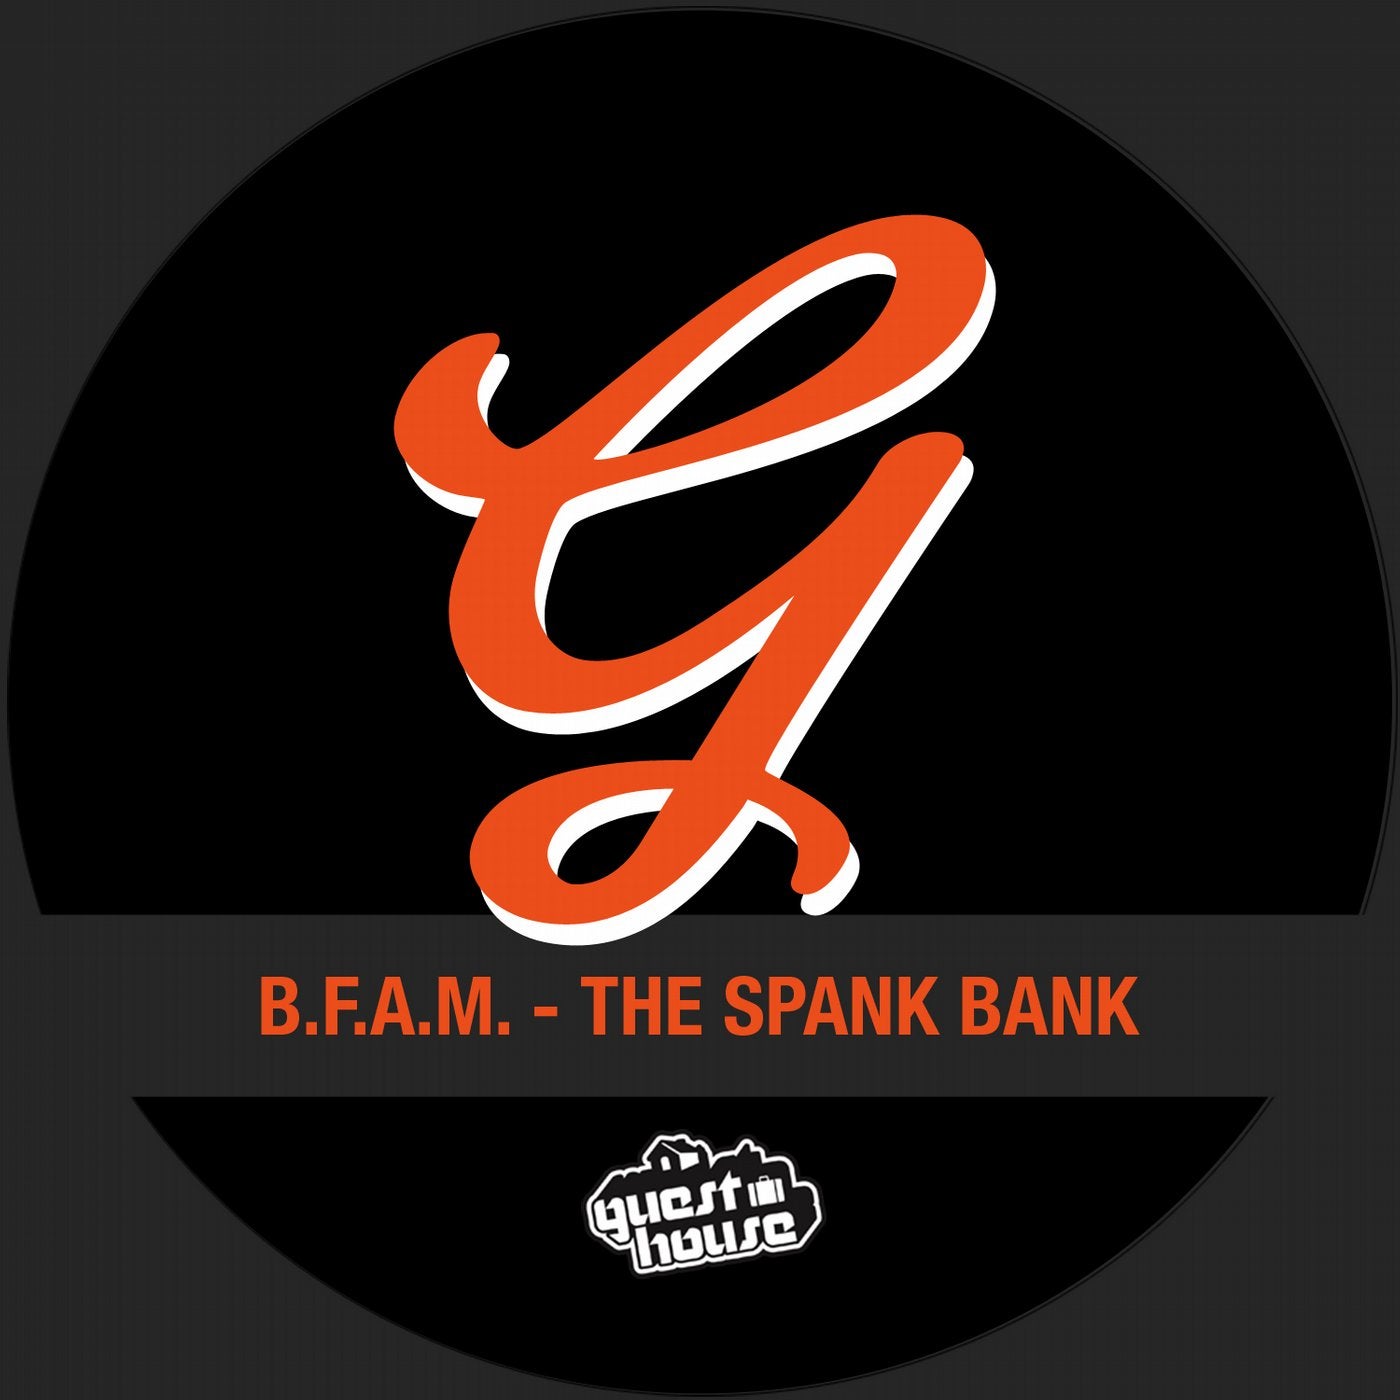 The Spank Bank